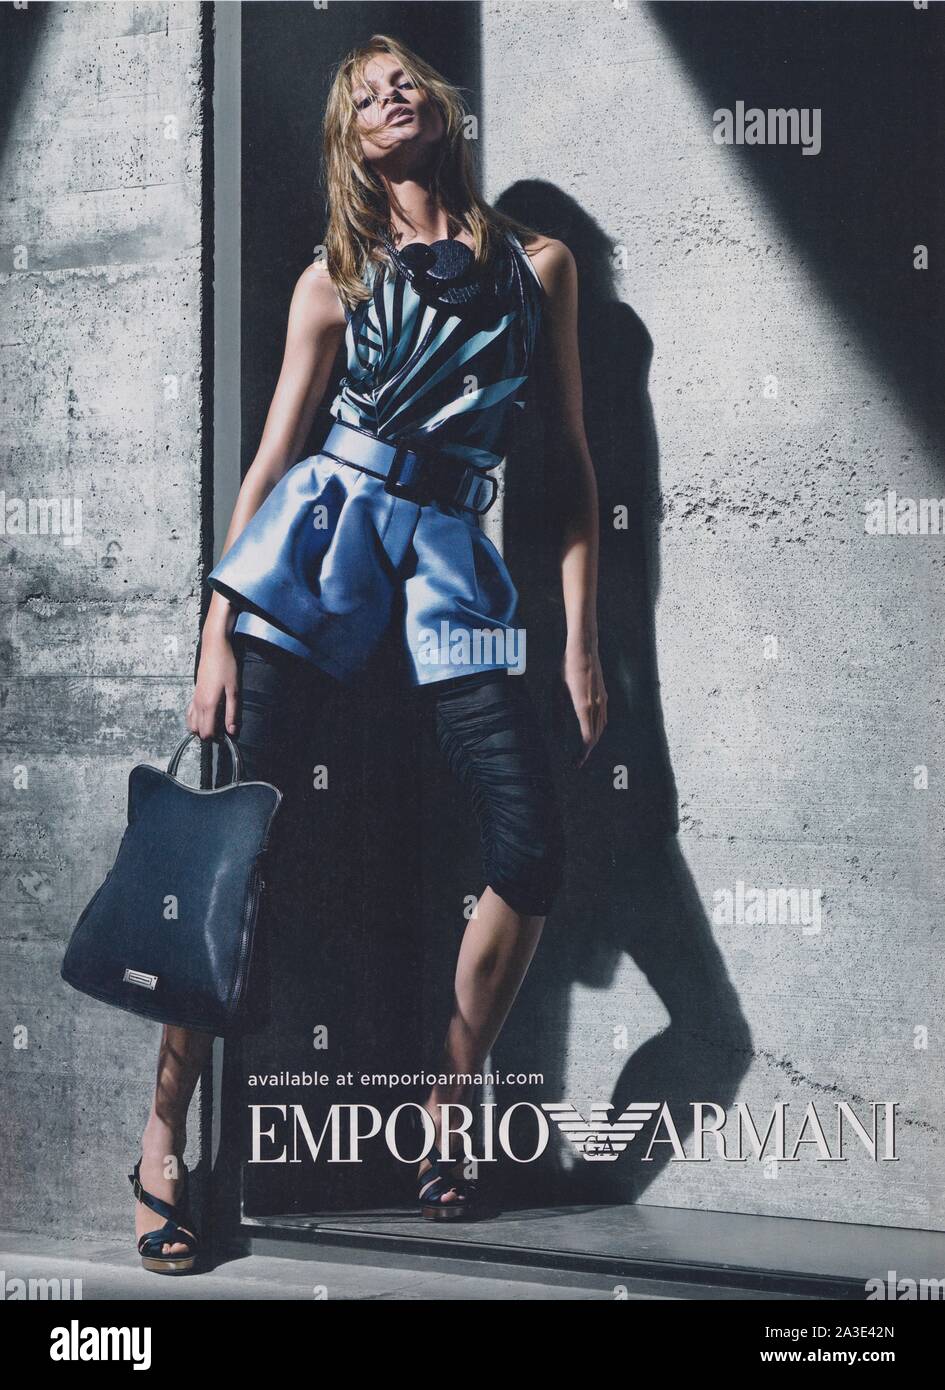 poster advertising Emporio Armani by Giorgio Armani with Anna Selezneva in  magazine from 2011, advertisement creative Emporio Armani advert from 2010s  Stock Photo - Alamy